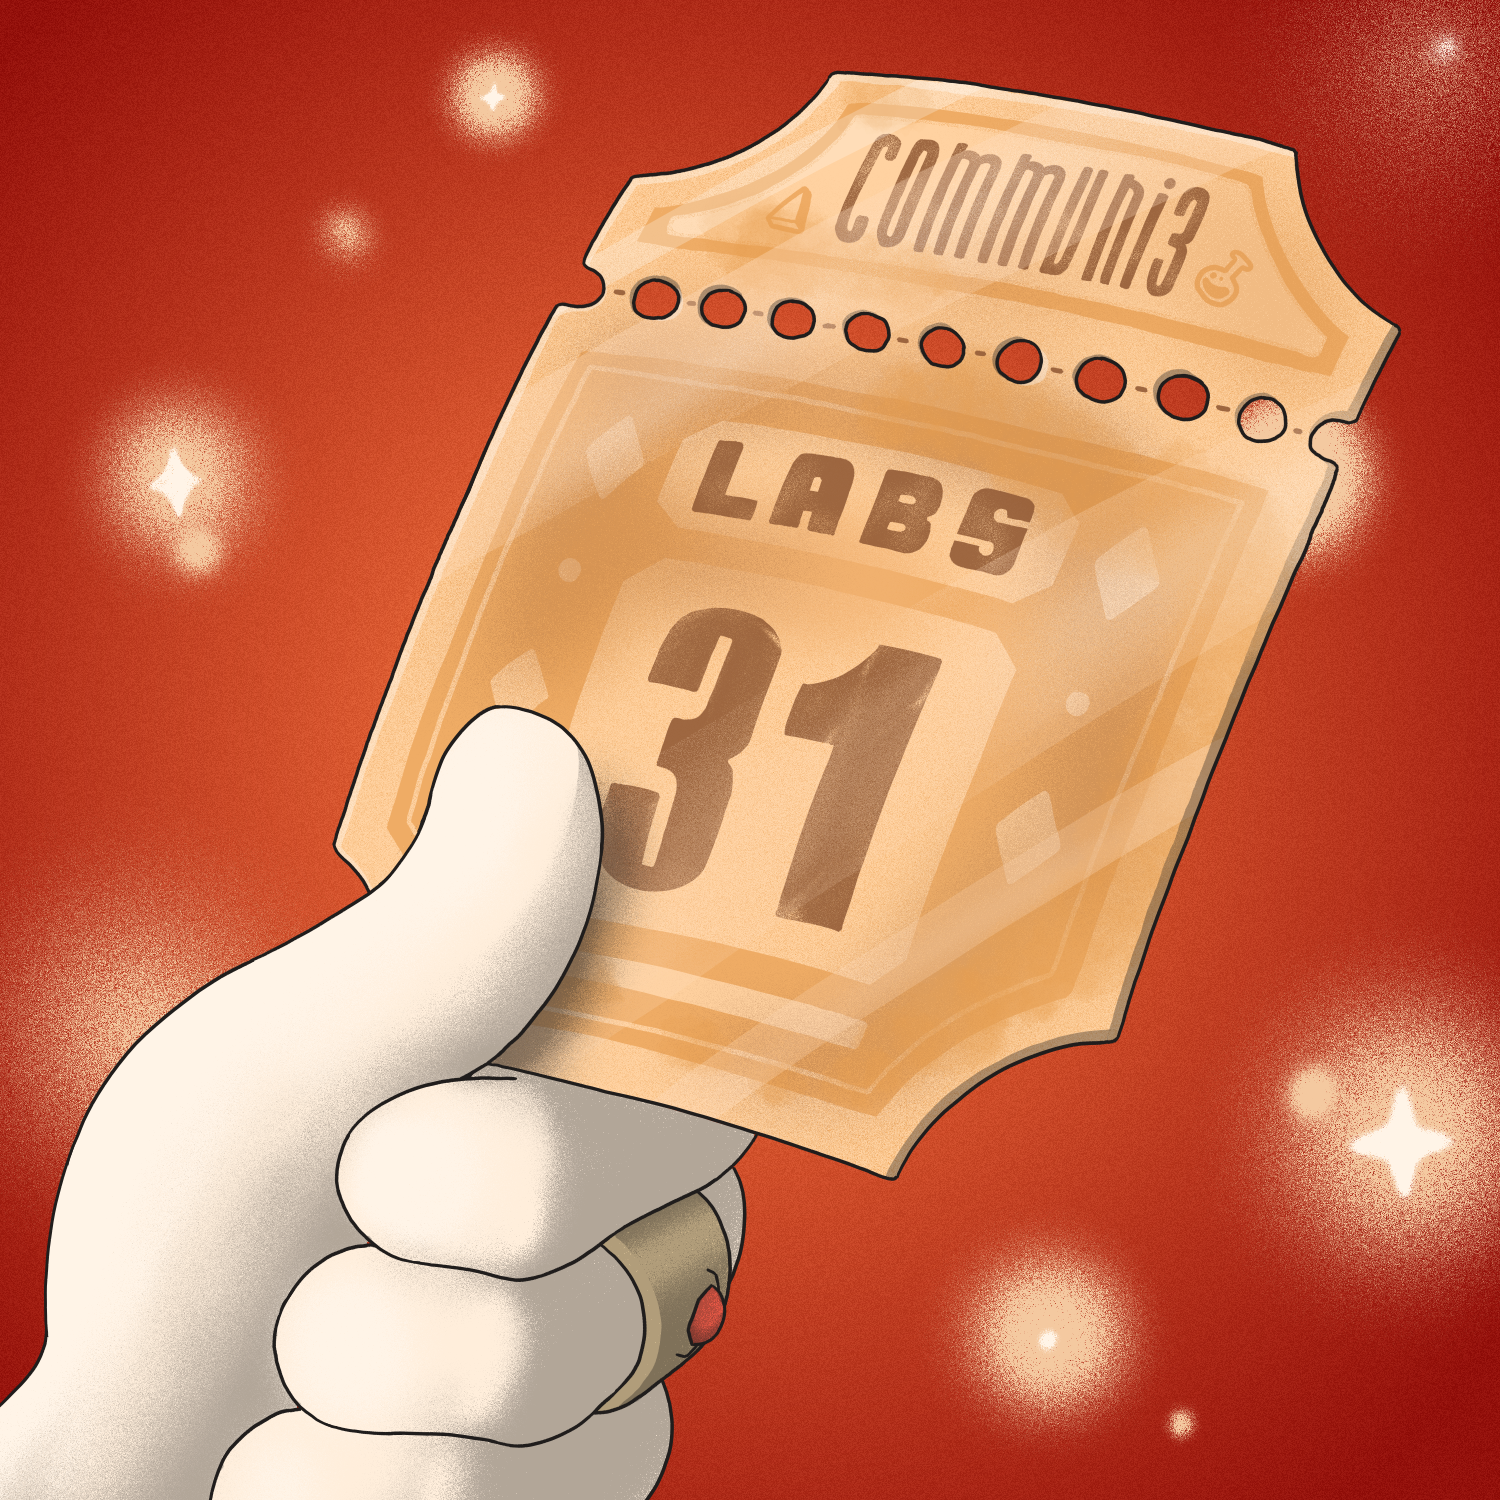 Laboratory #31